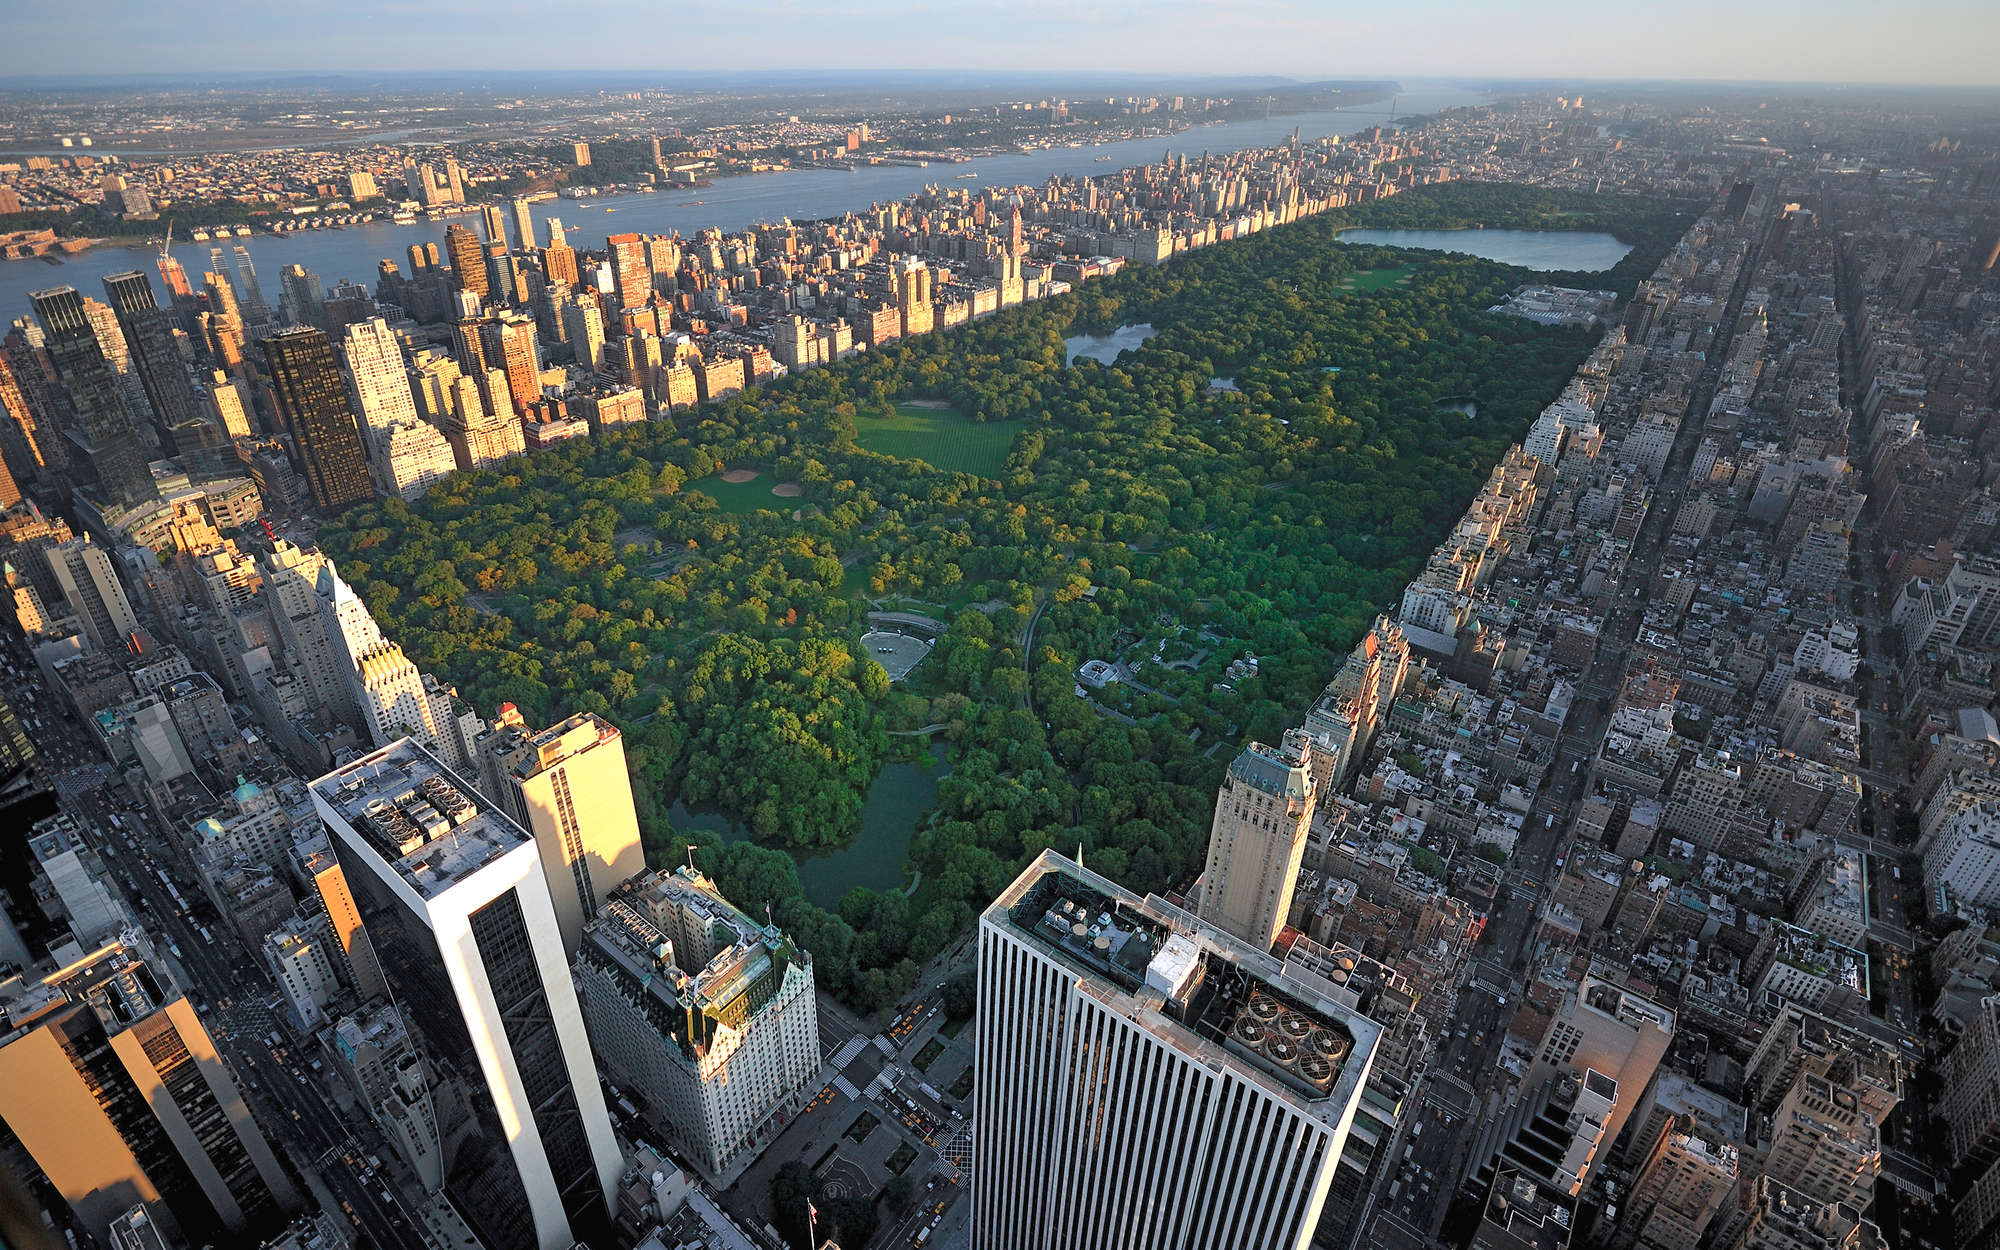             Fotomurali New York Central Park dall'alto - Pile liscio premium
        